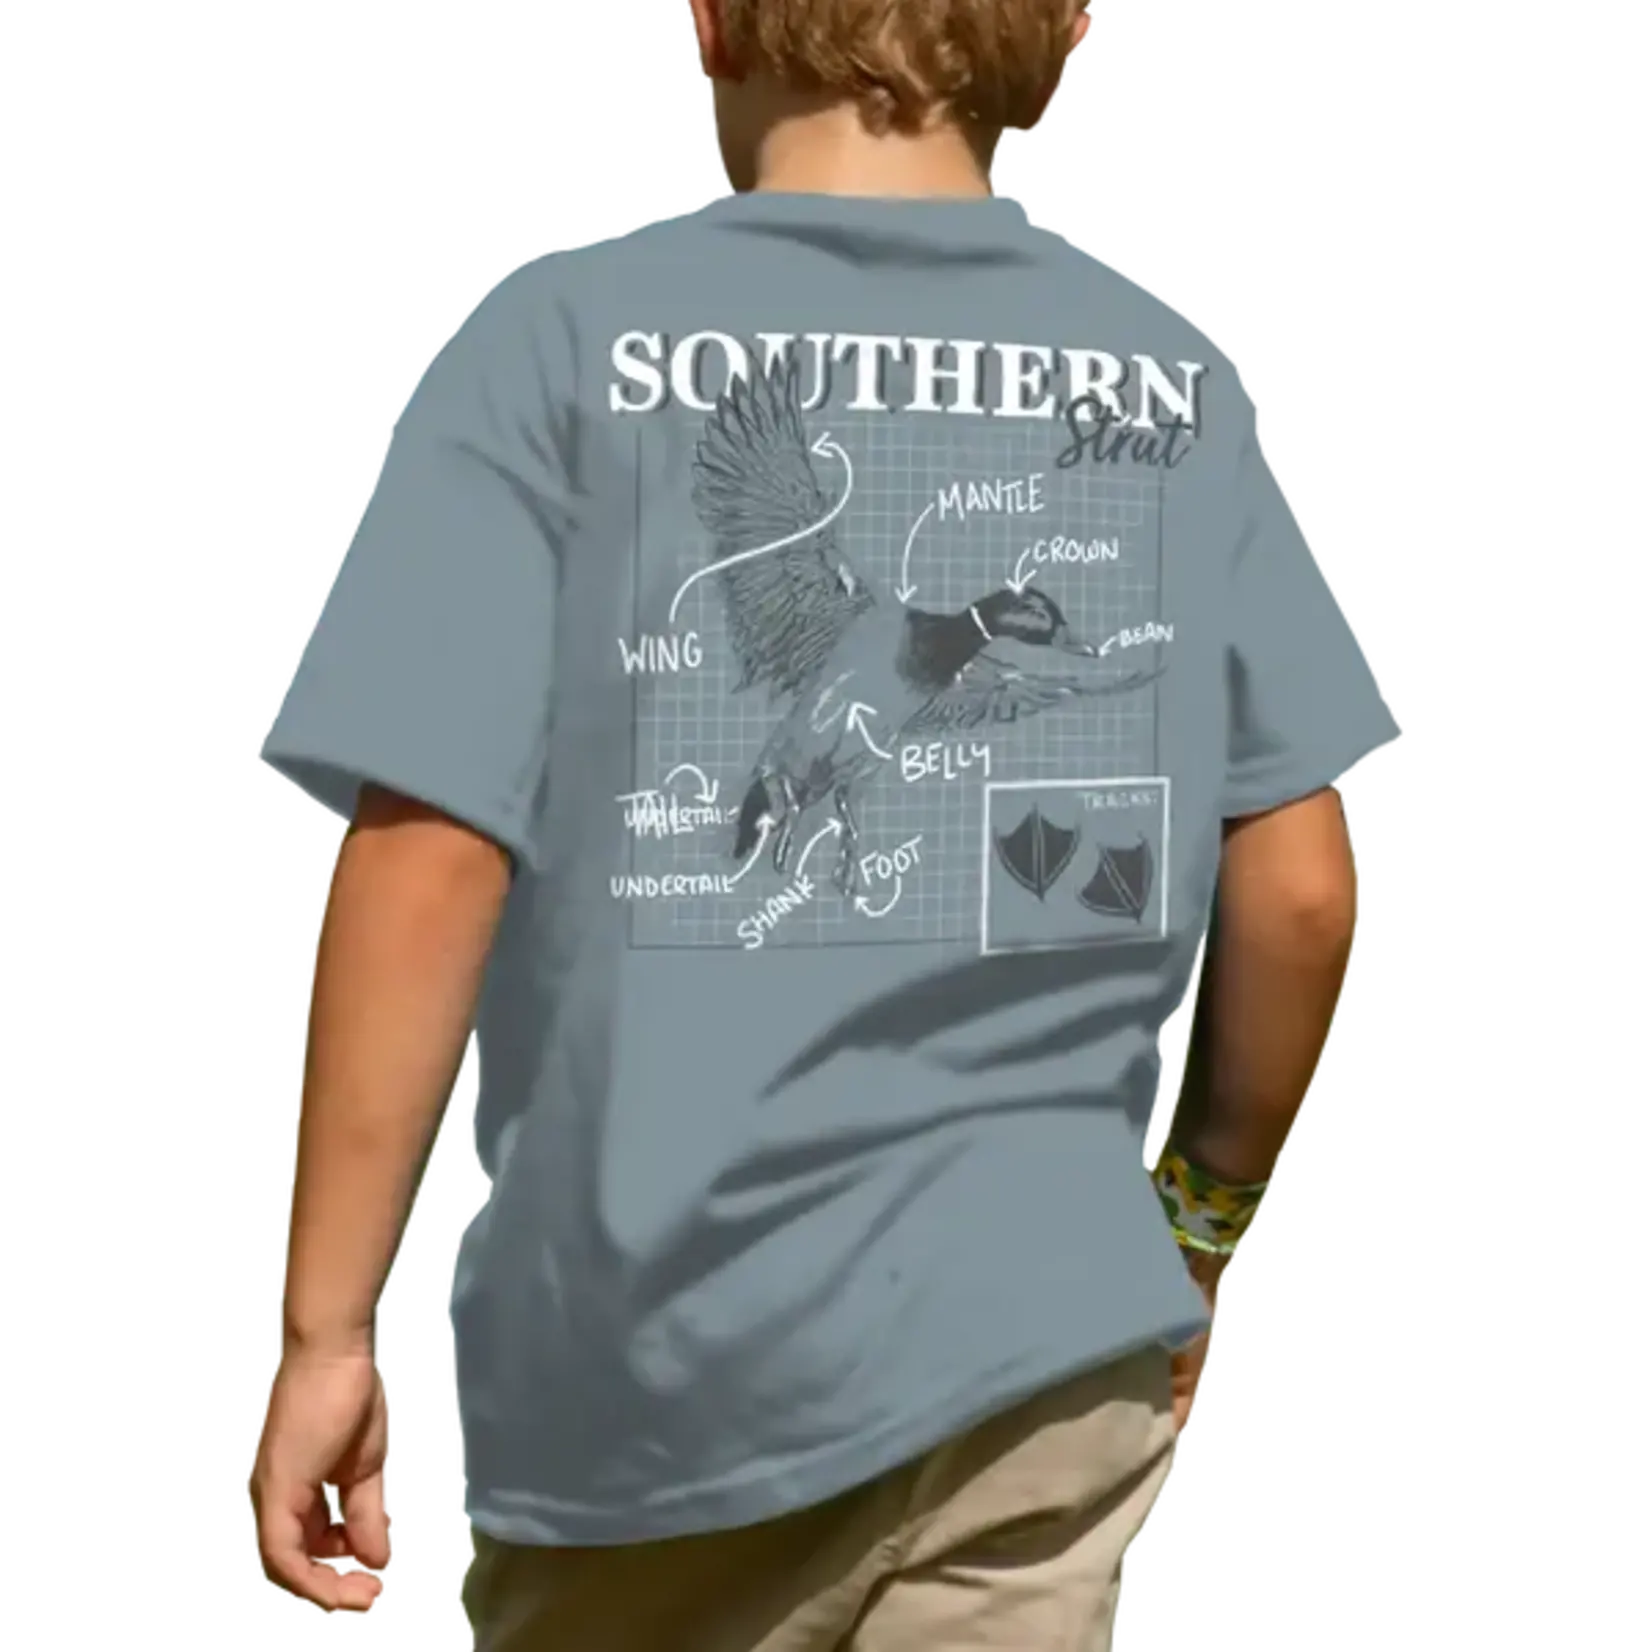 Southern Strut Southern Strut Youth Mallard Parts S/S TEE Shirt